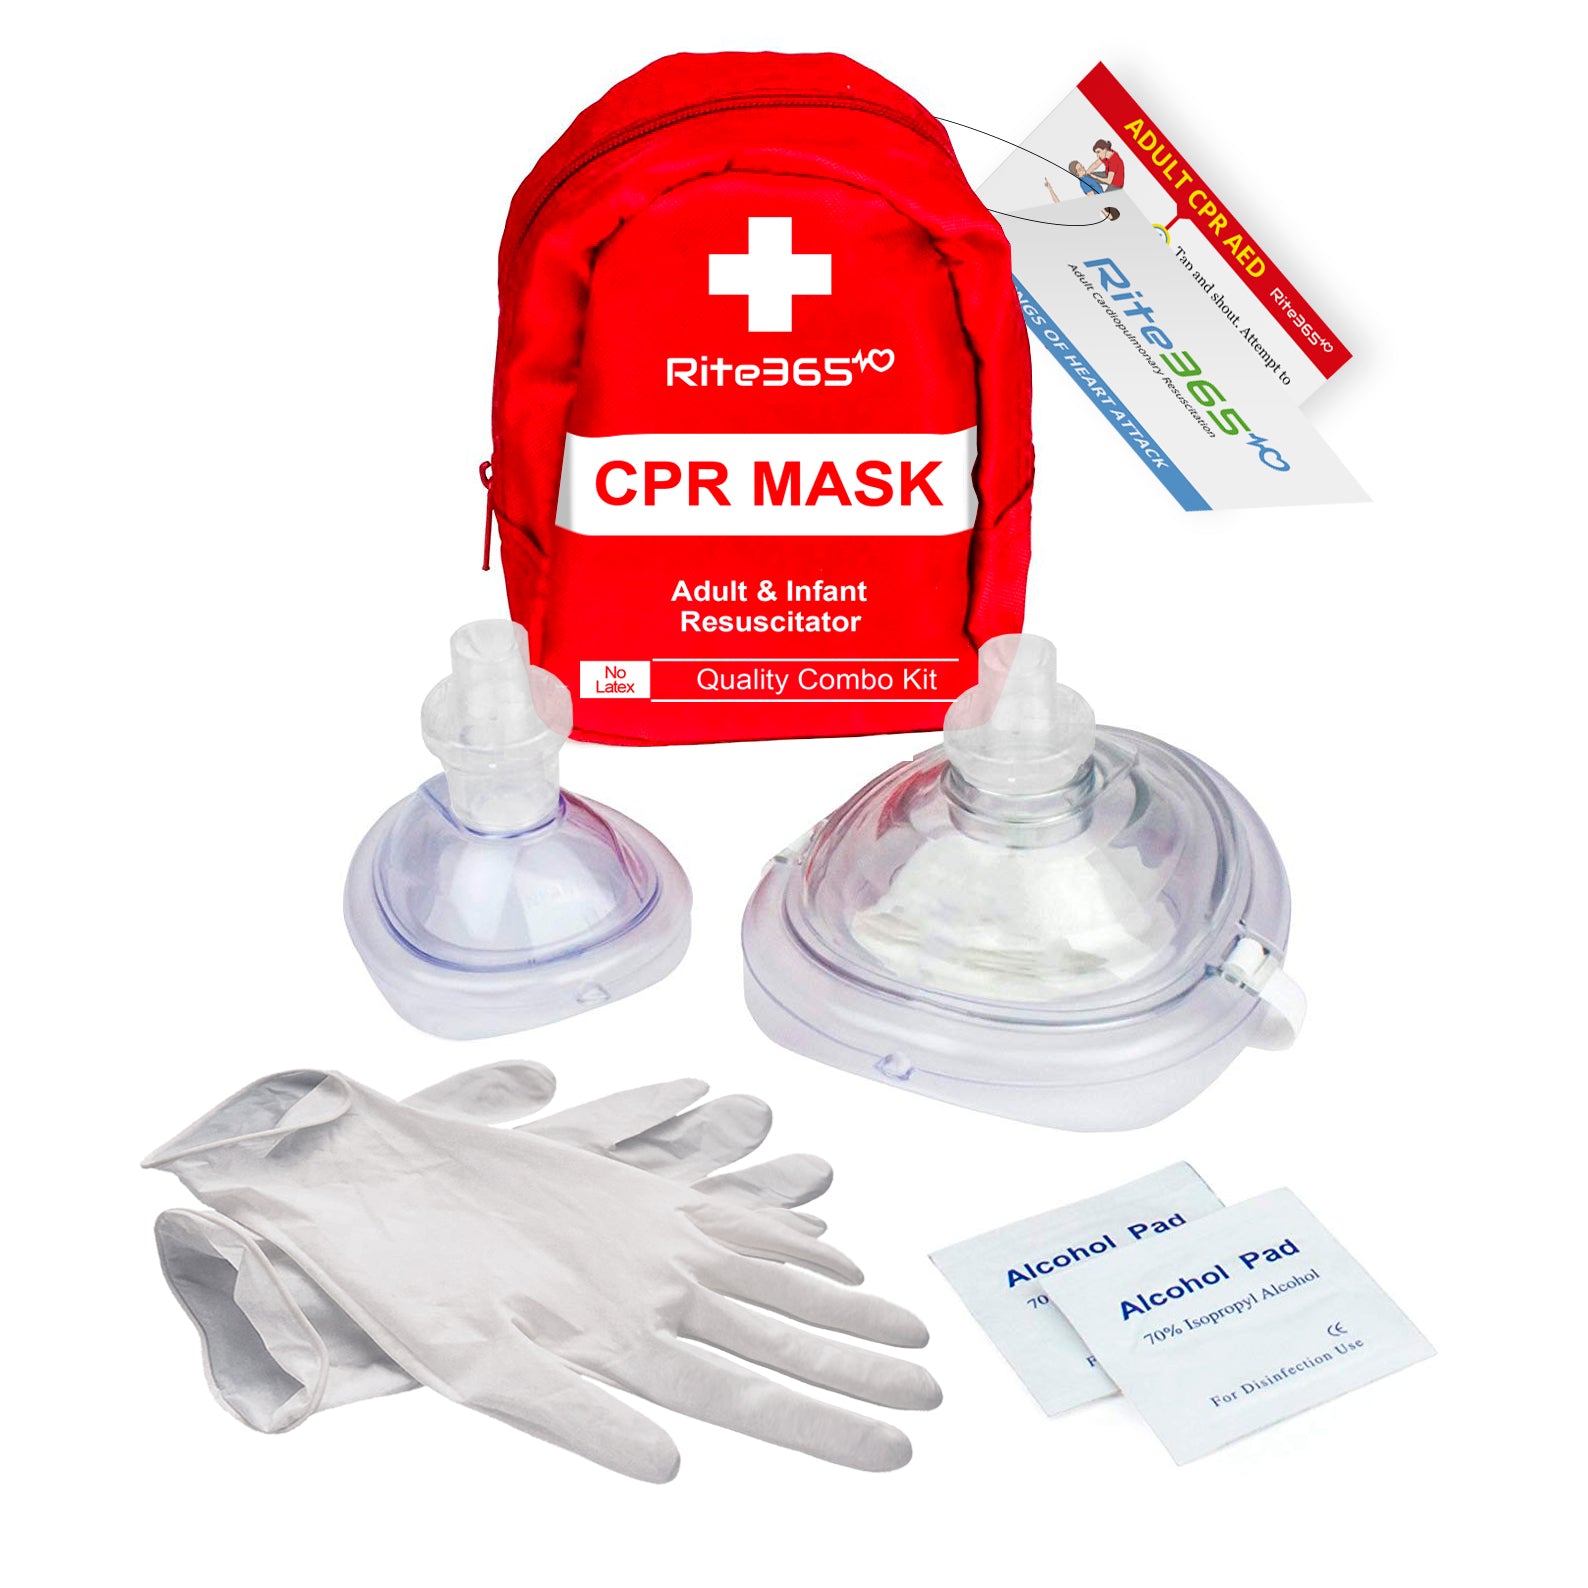 CPR Combo Kit for Adult & Infant Resuscitation –